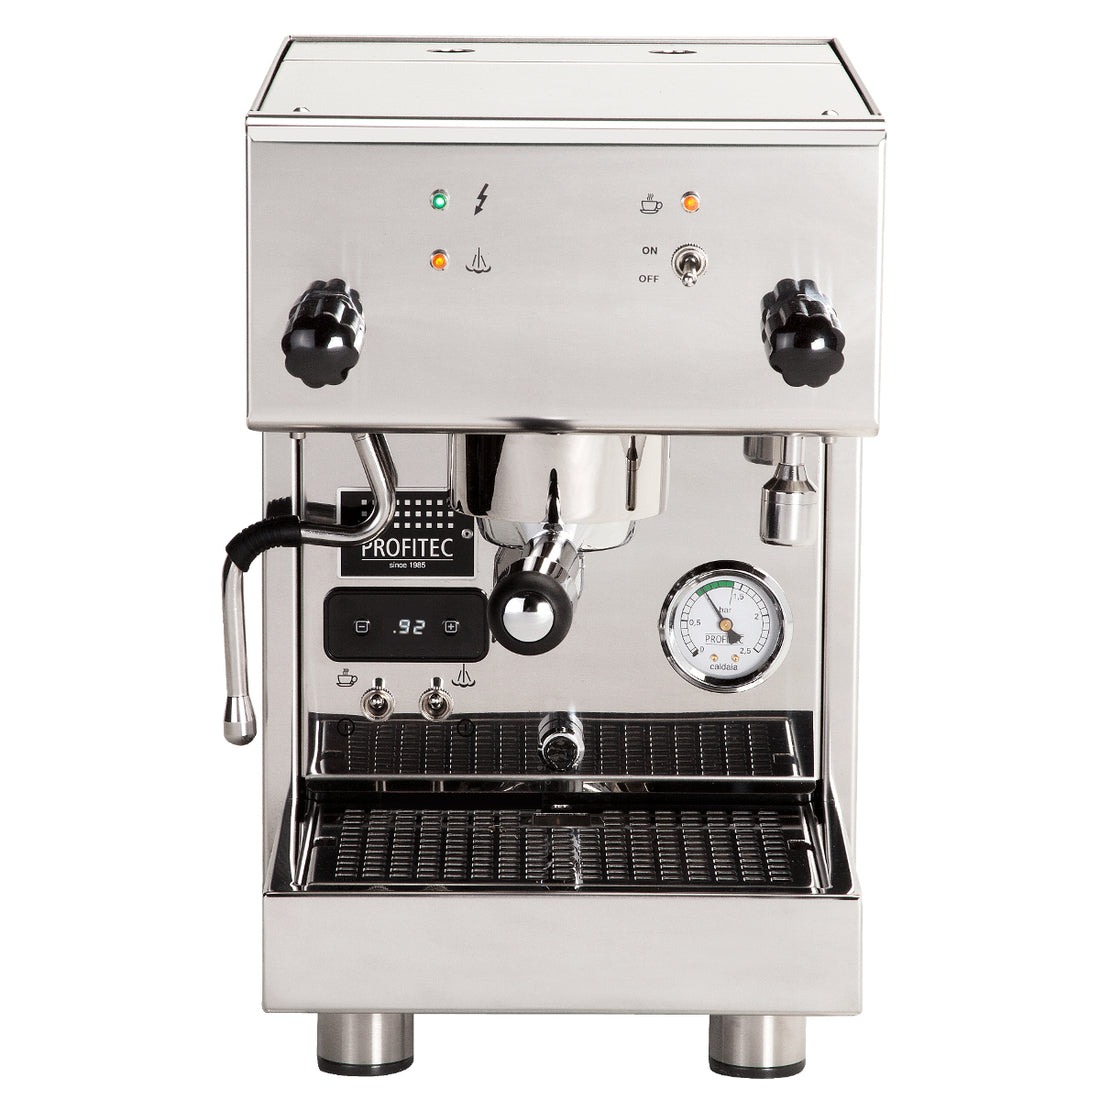 Refurbished Profitec Pro 300 Dual Boiler Espresso Machine - Front